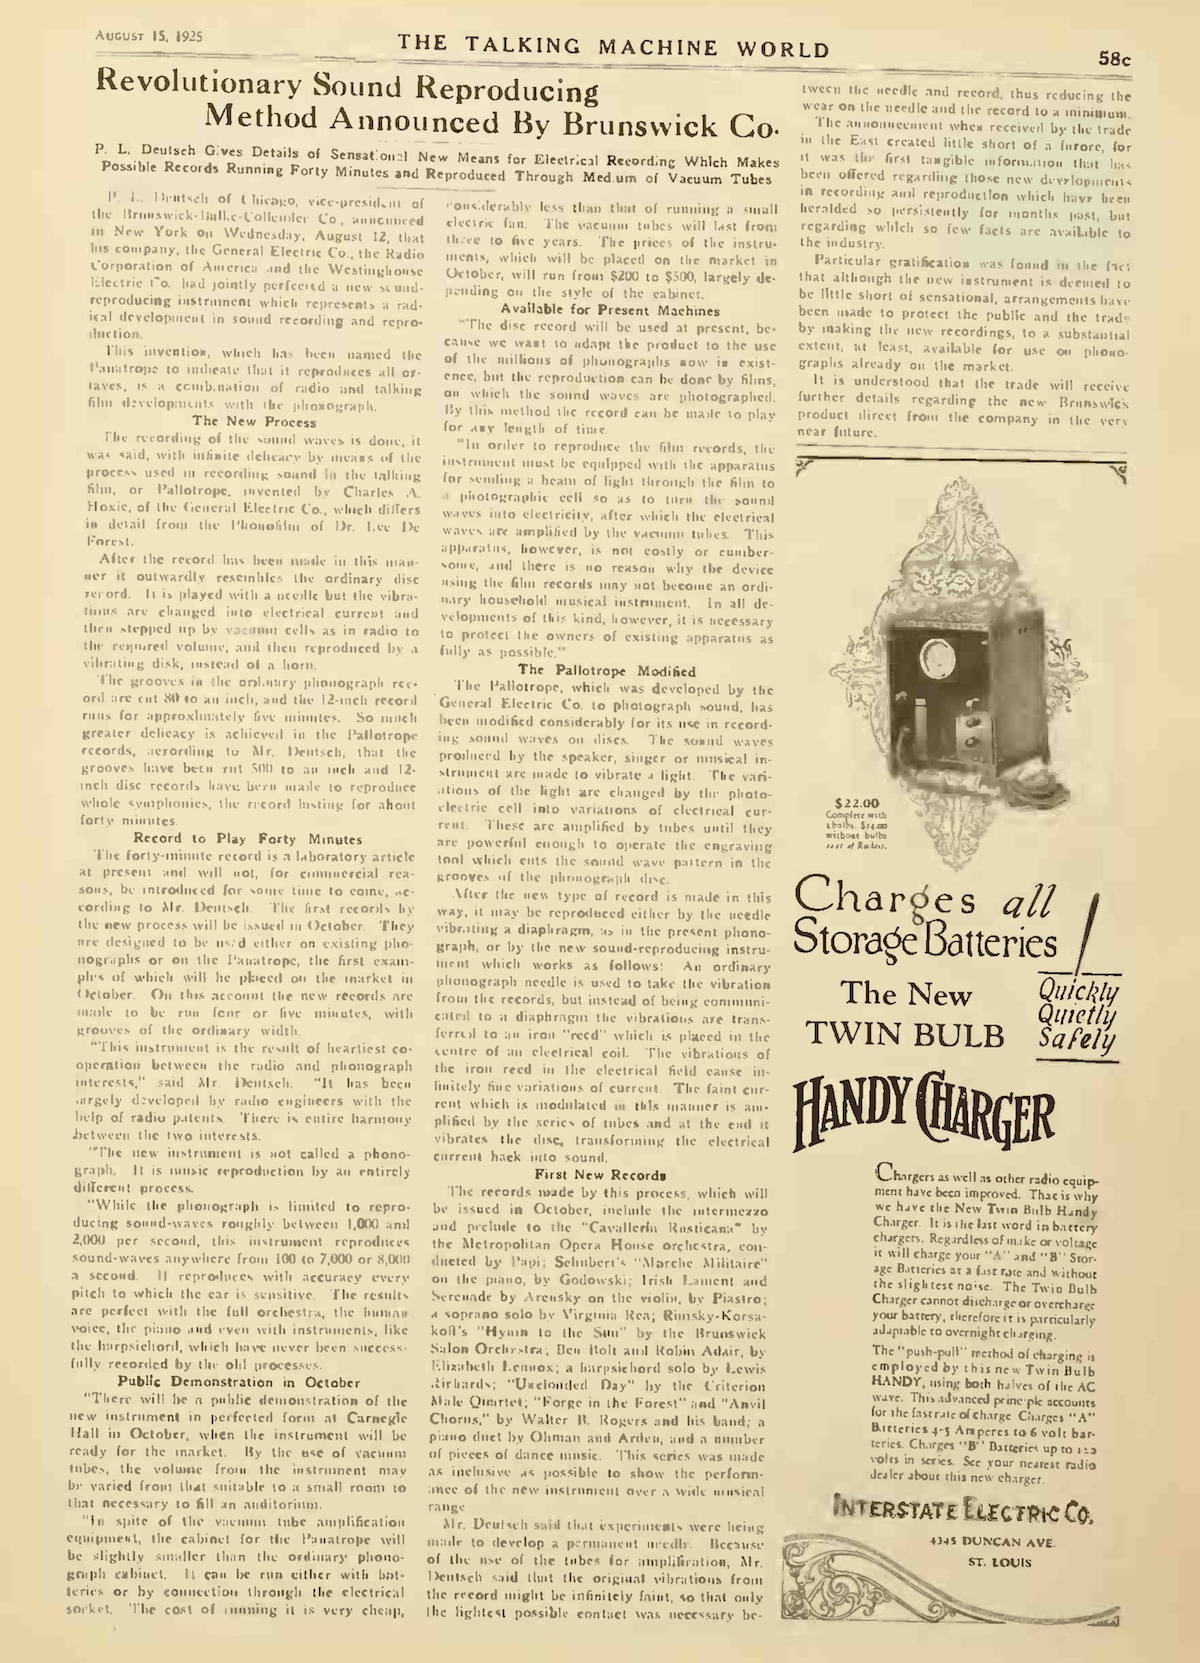 The Talking Machine World, Aug. 15, 1925, p.58c